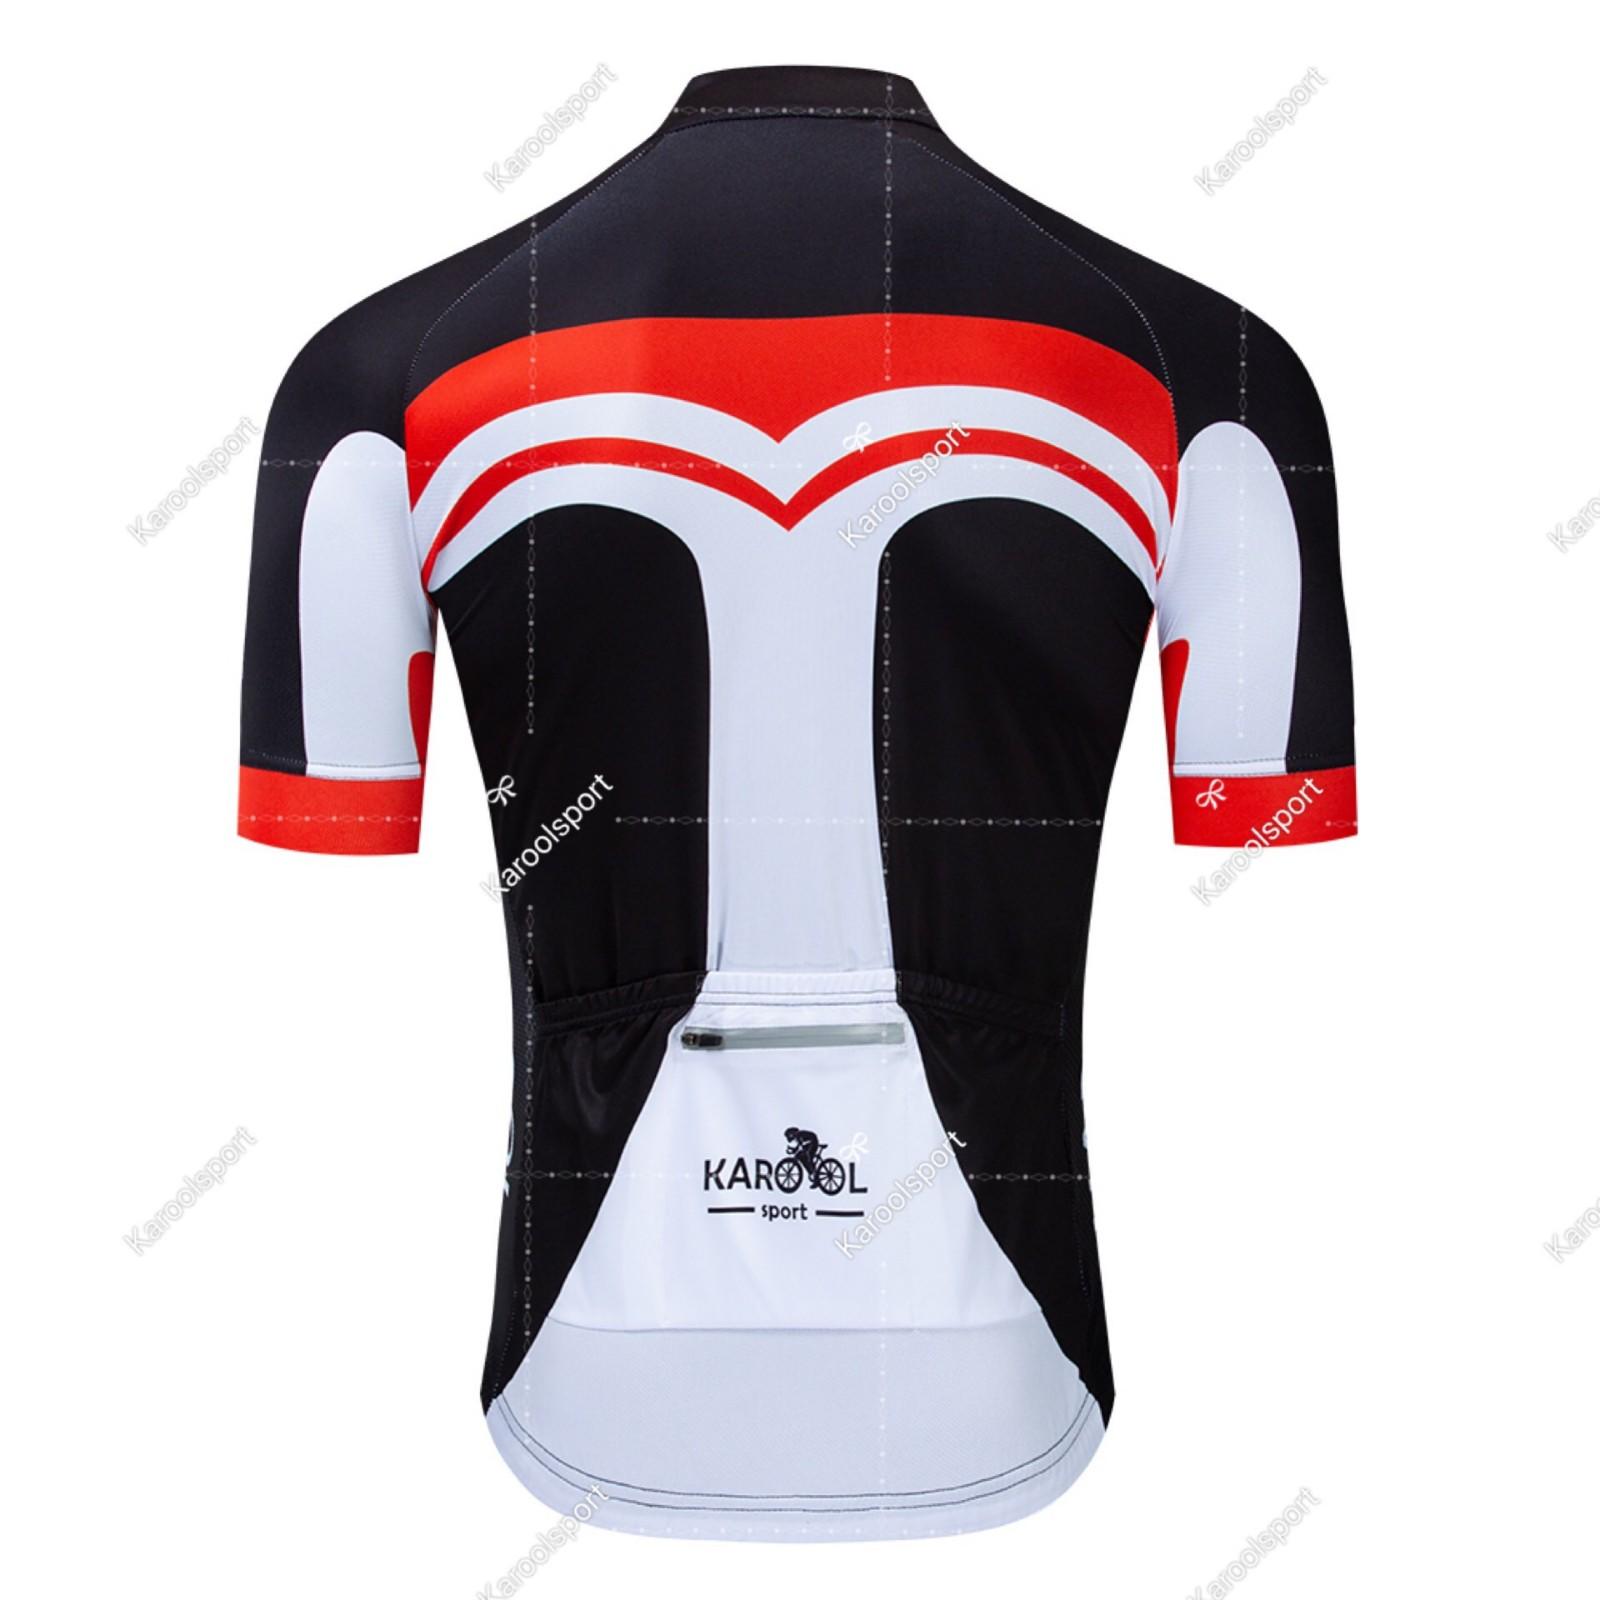 Karool bike jersey customized for men-3